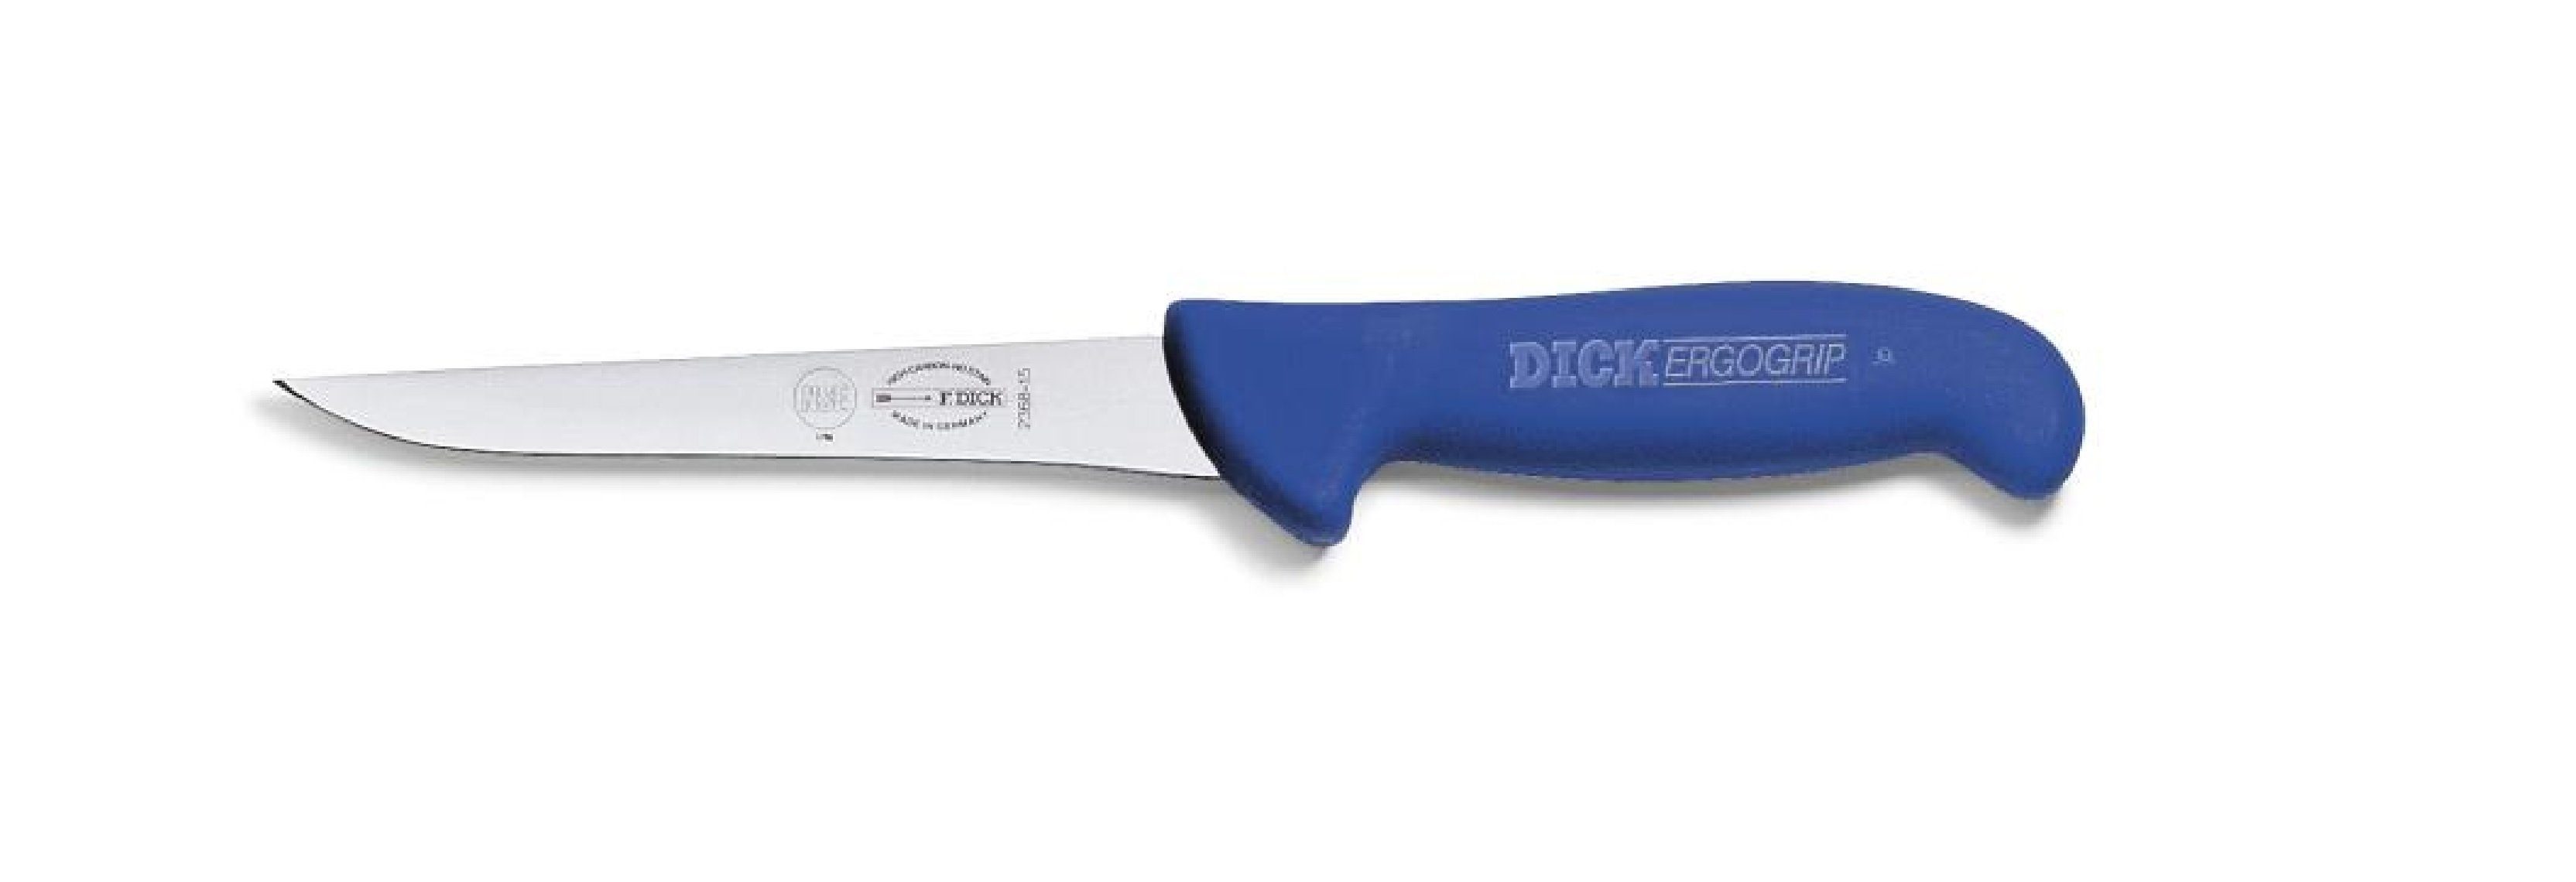 Ausbeinmesser Messer cm Dick schmale Ausbeinmesser Klinge Dick 15 8236815 Ergogrip